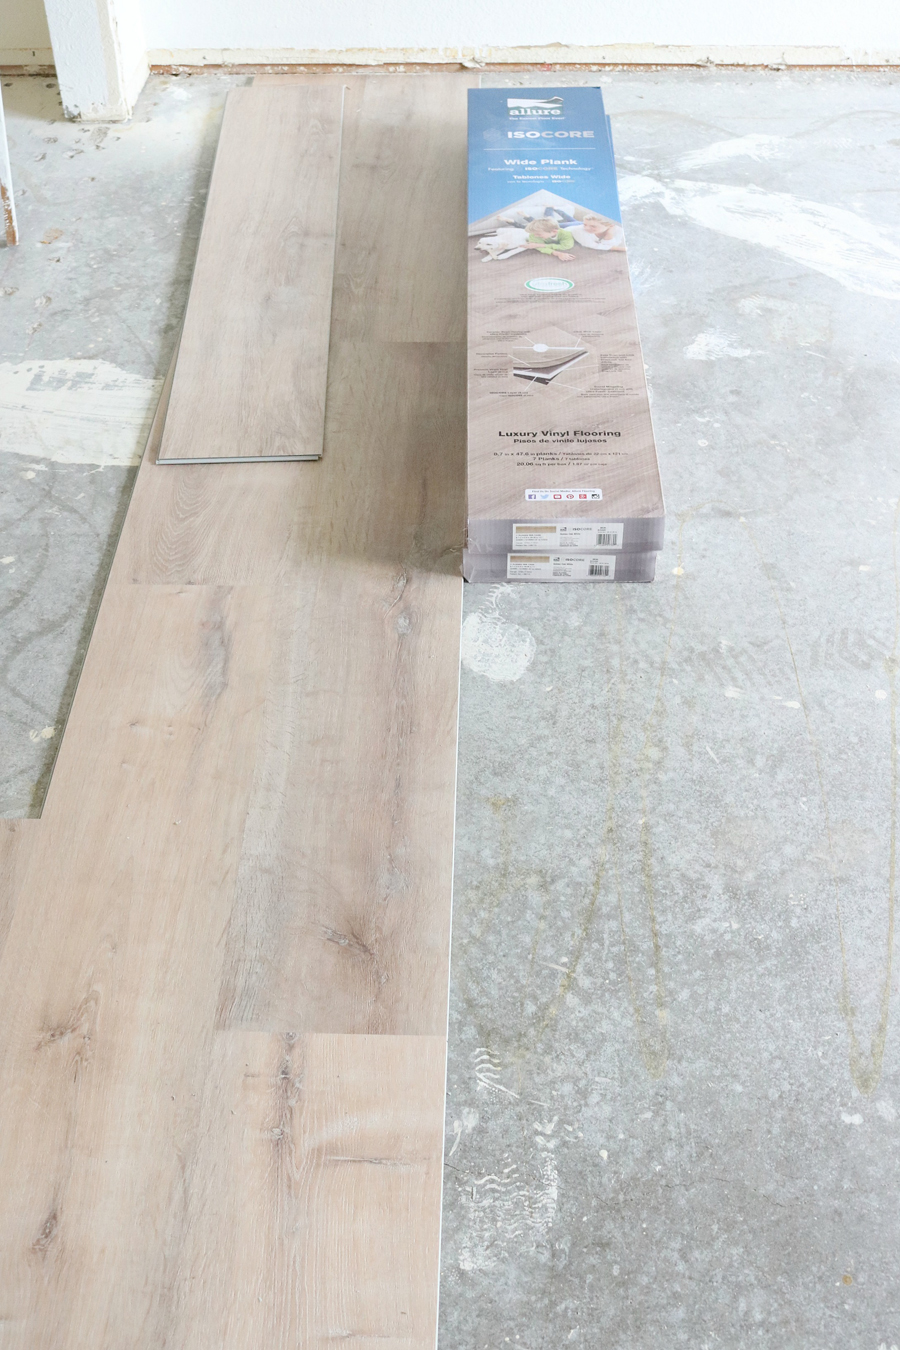 Wood Look Vinyl Plank Flooring from Allure